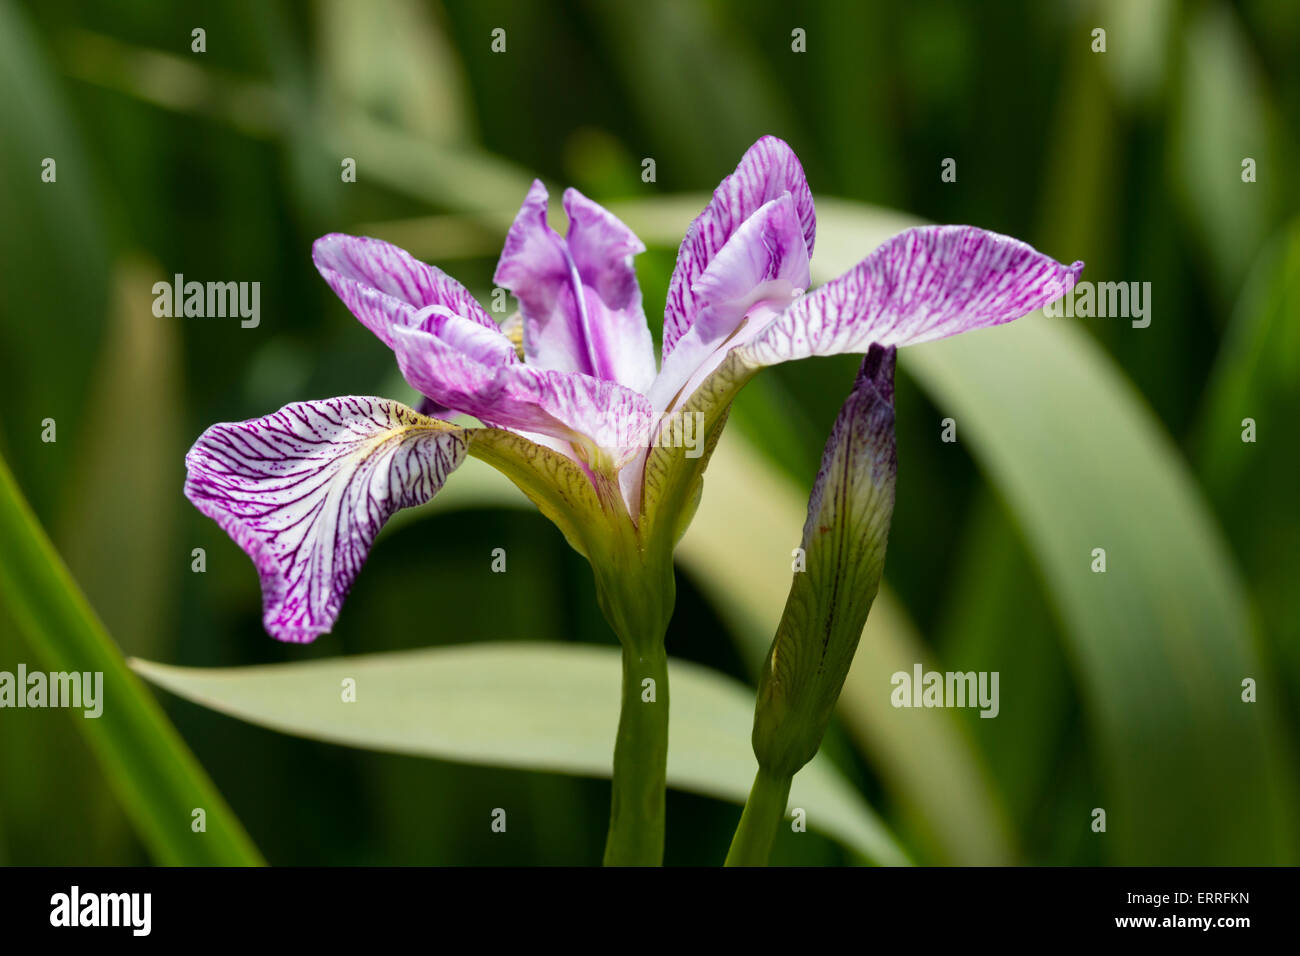 Elegante inizio estate fiore del marginale, Iris versicolor 'Scadenza' Foto Stock